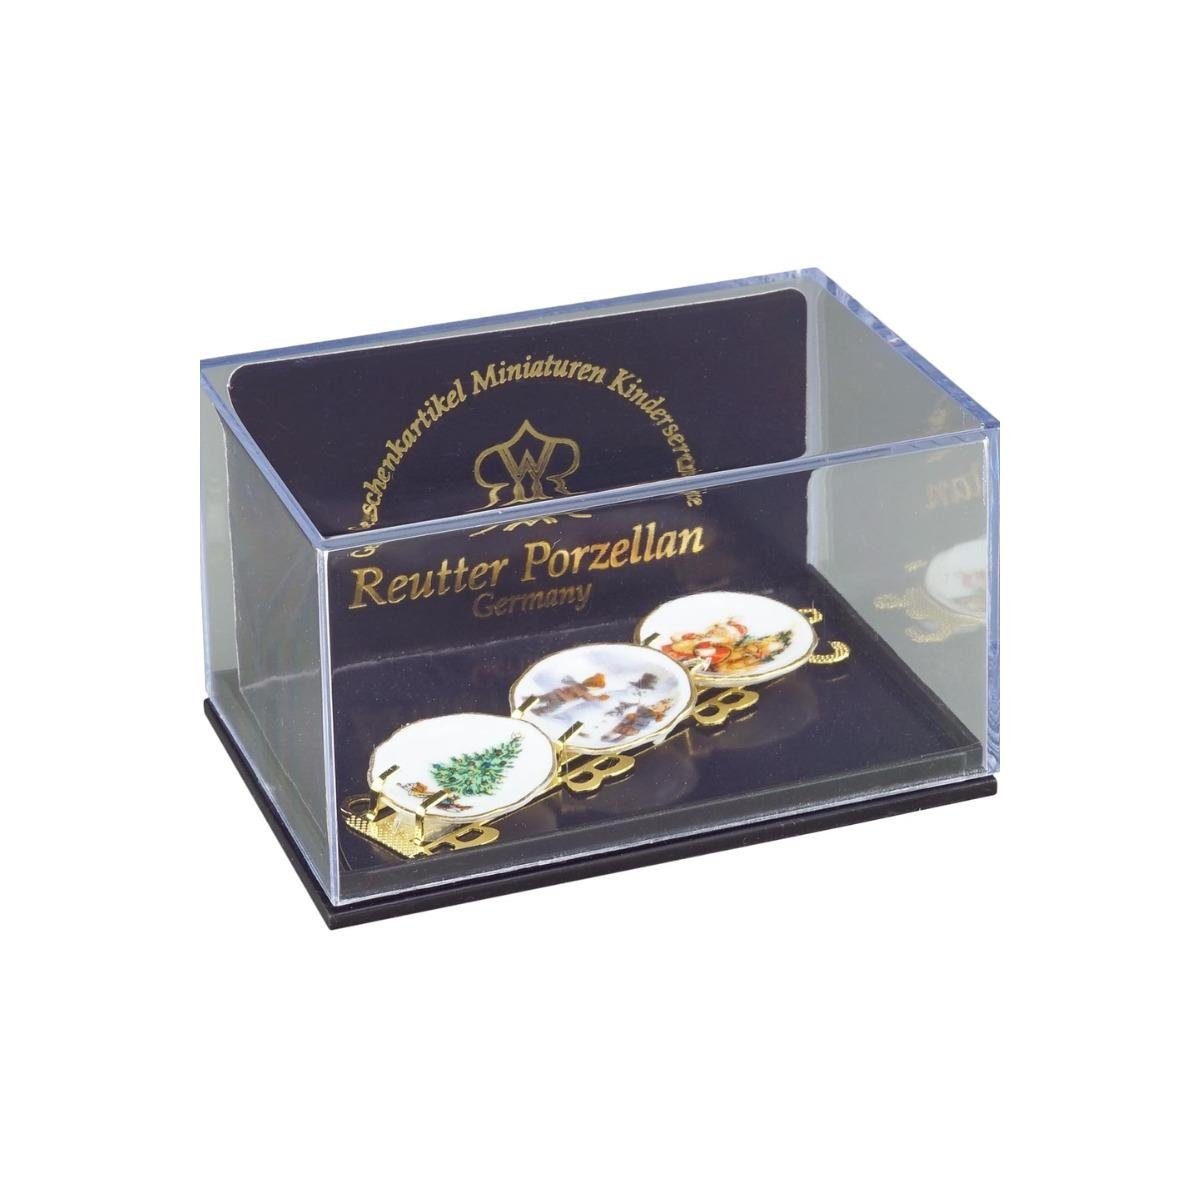 Porzellan Reutter Tellerregal 001.388/6 Miniatur Dekofigur "Weihnachten", -